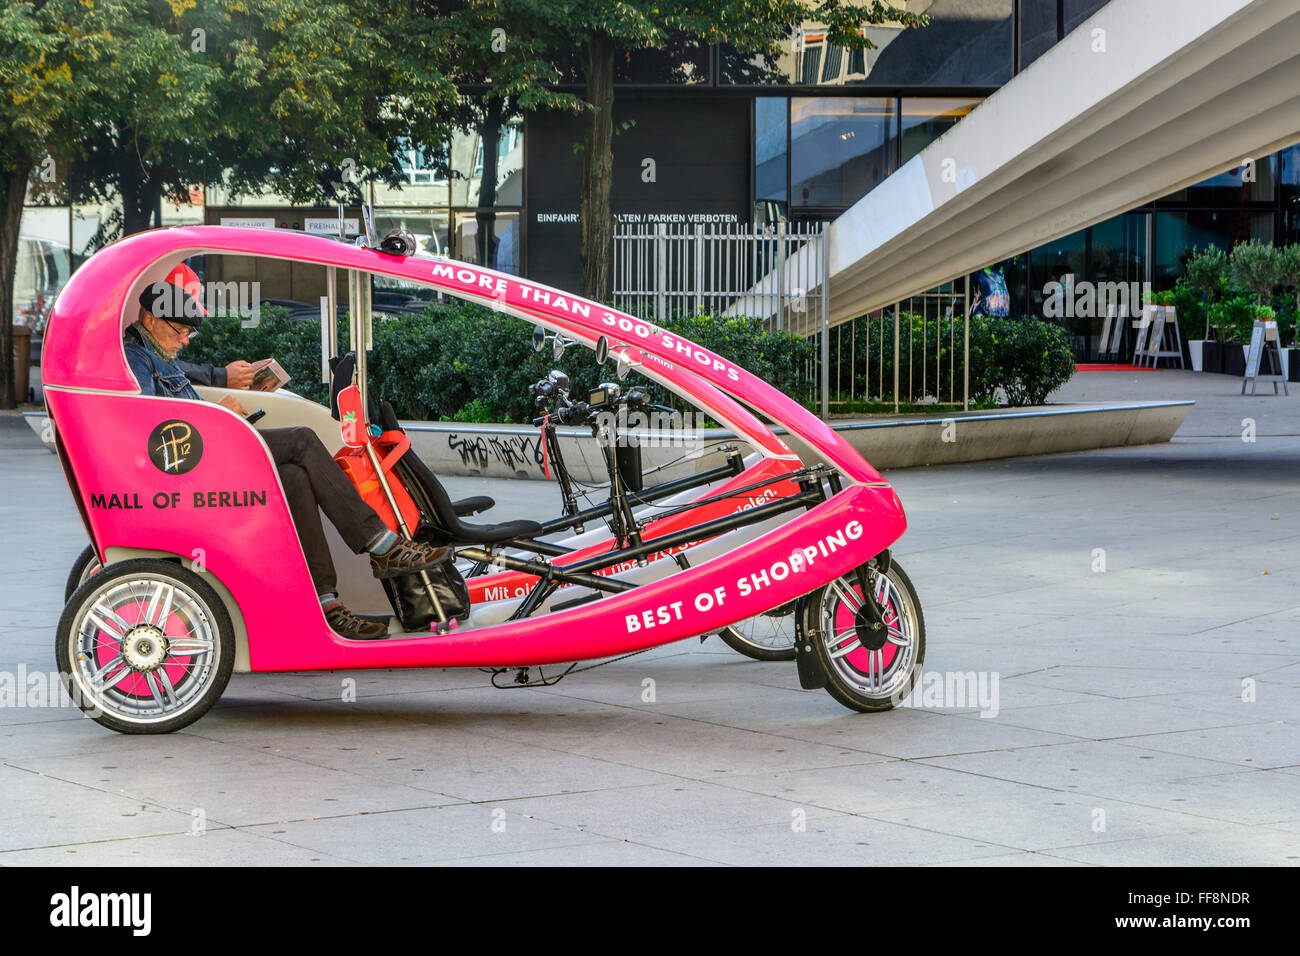 Fahrrad-Taxi in Berlin Stockfotografie - Alamy